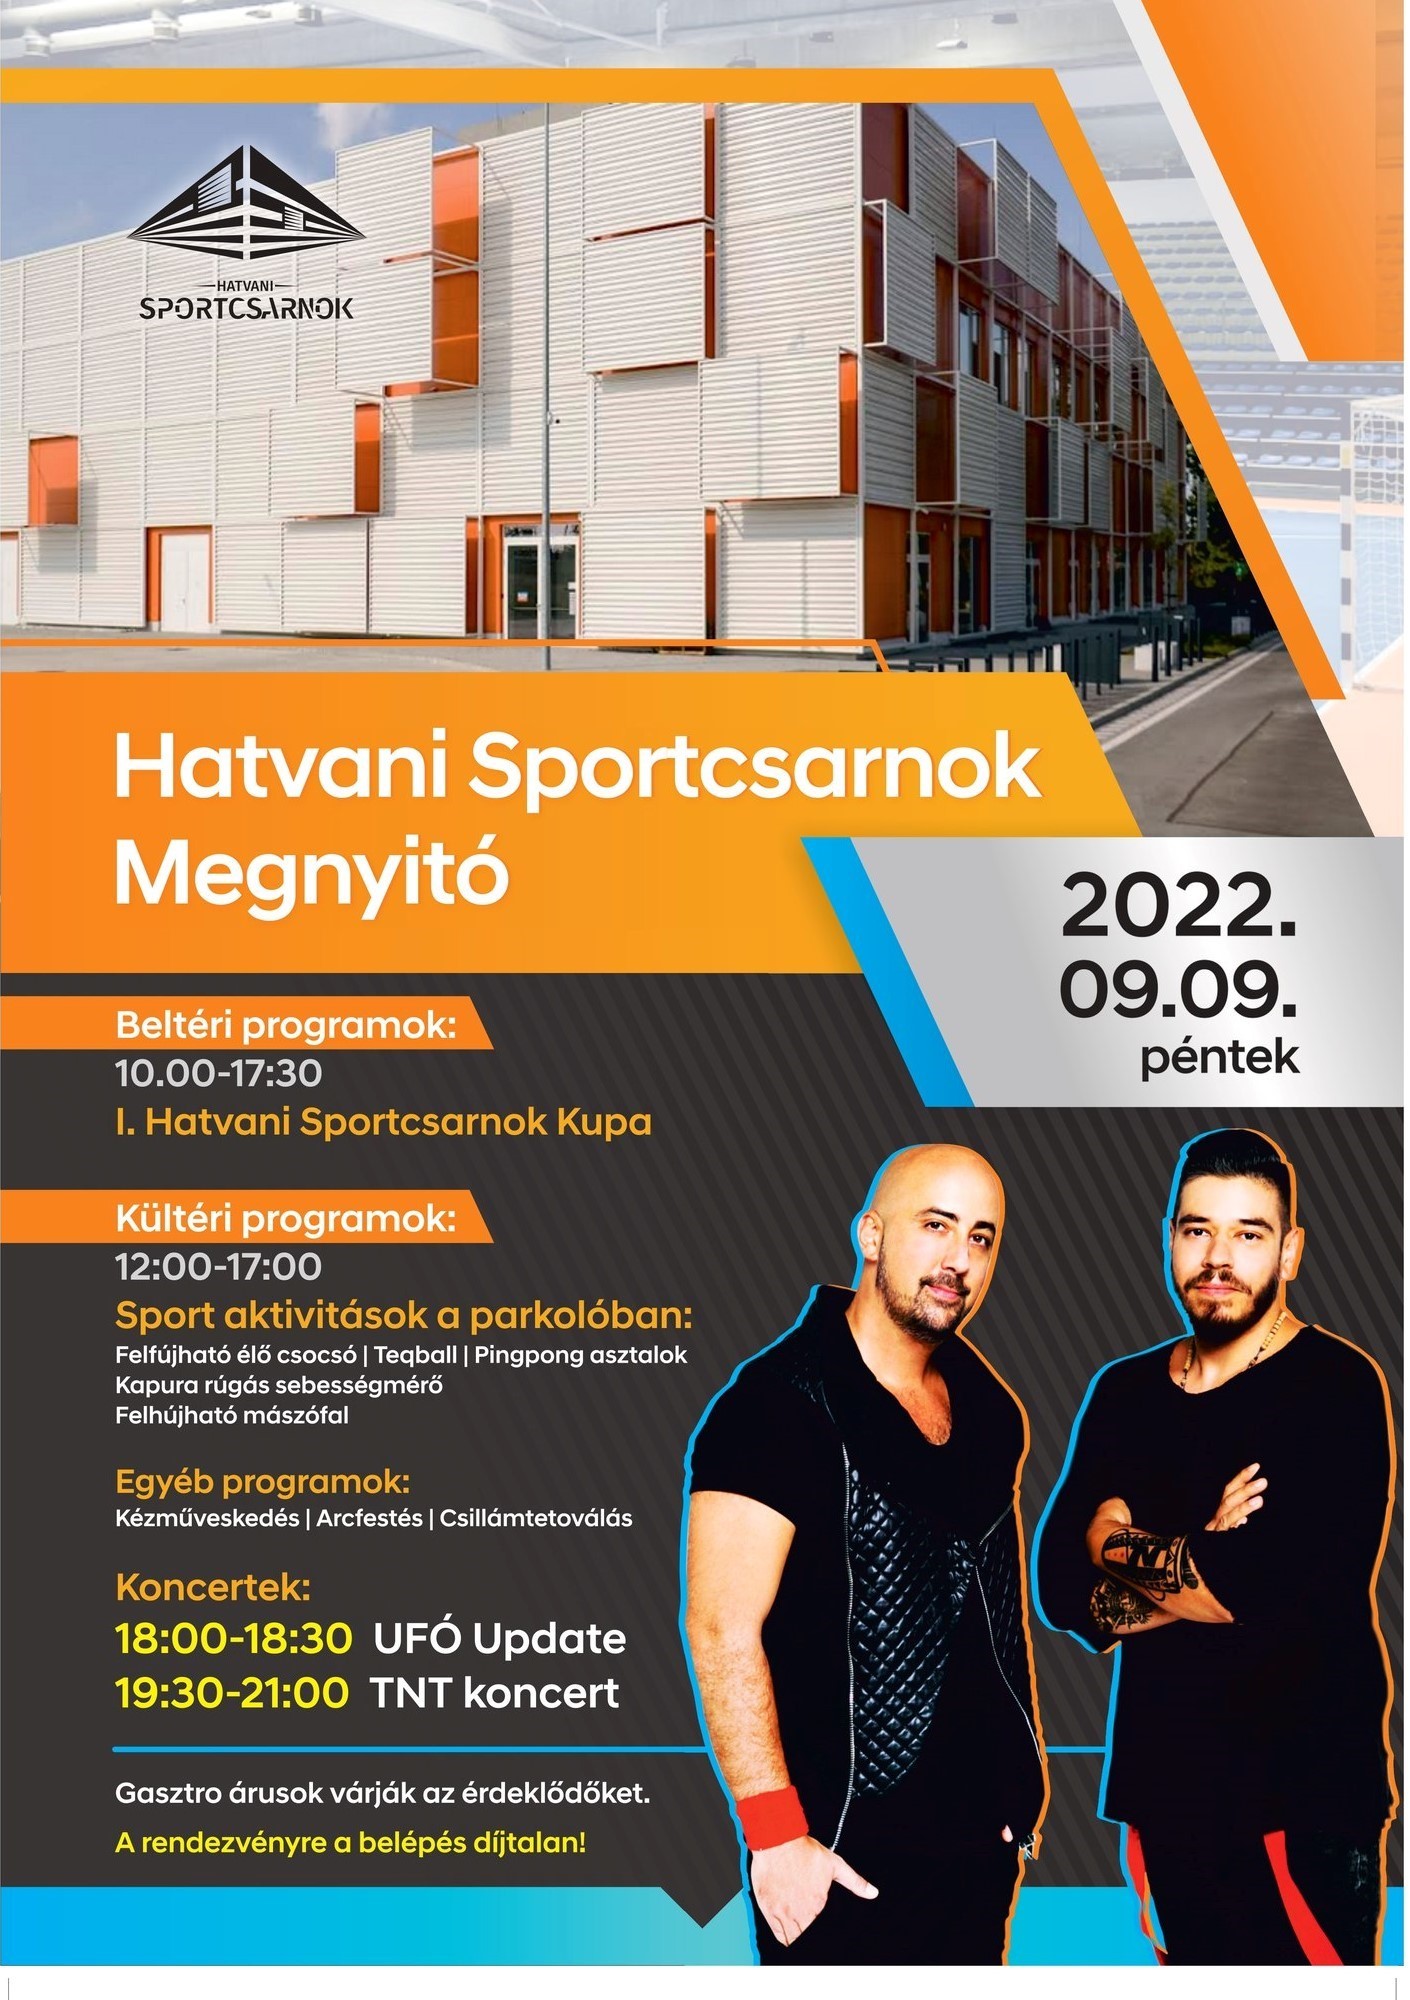 Hatvani Sportcsarnok ünnepélyes átadója